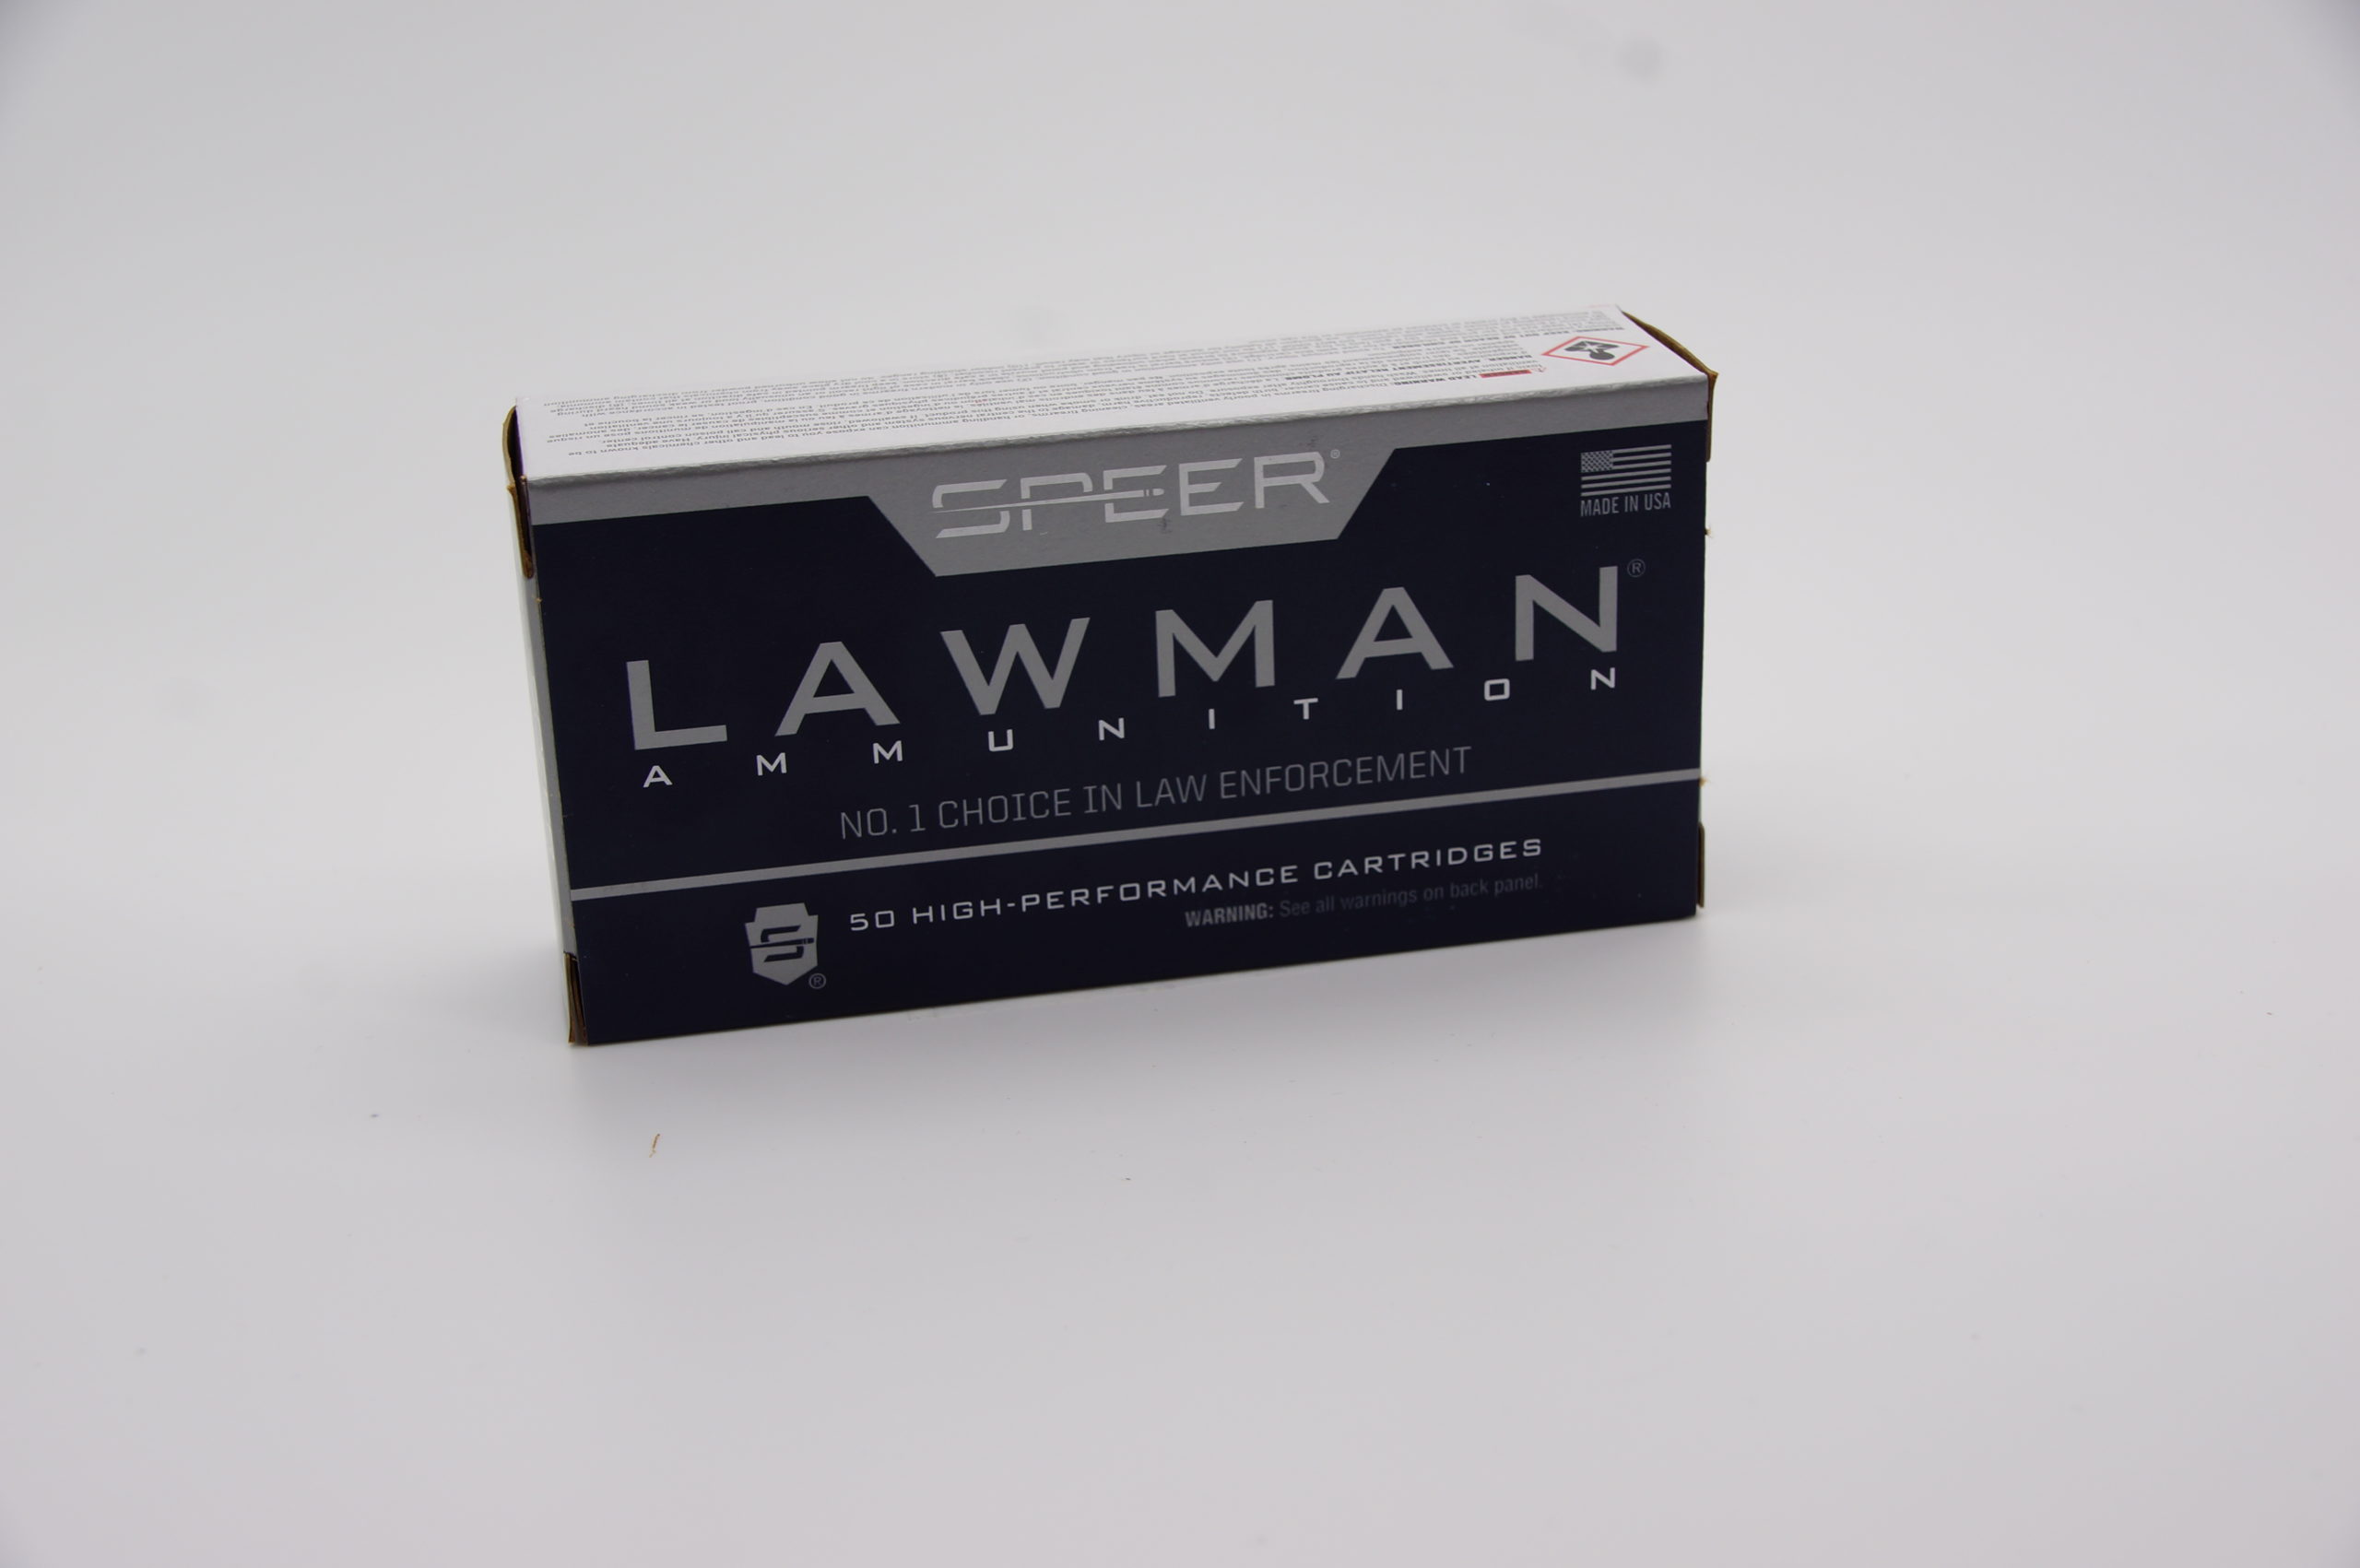 SPEER LAWMAN 9MM 147 GRAIN TOTAL METAL JACKET FLAT NOSE, 50RDS/BOX ...